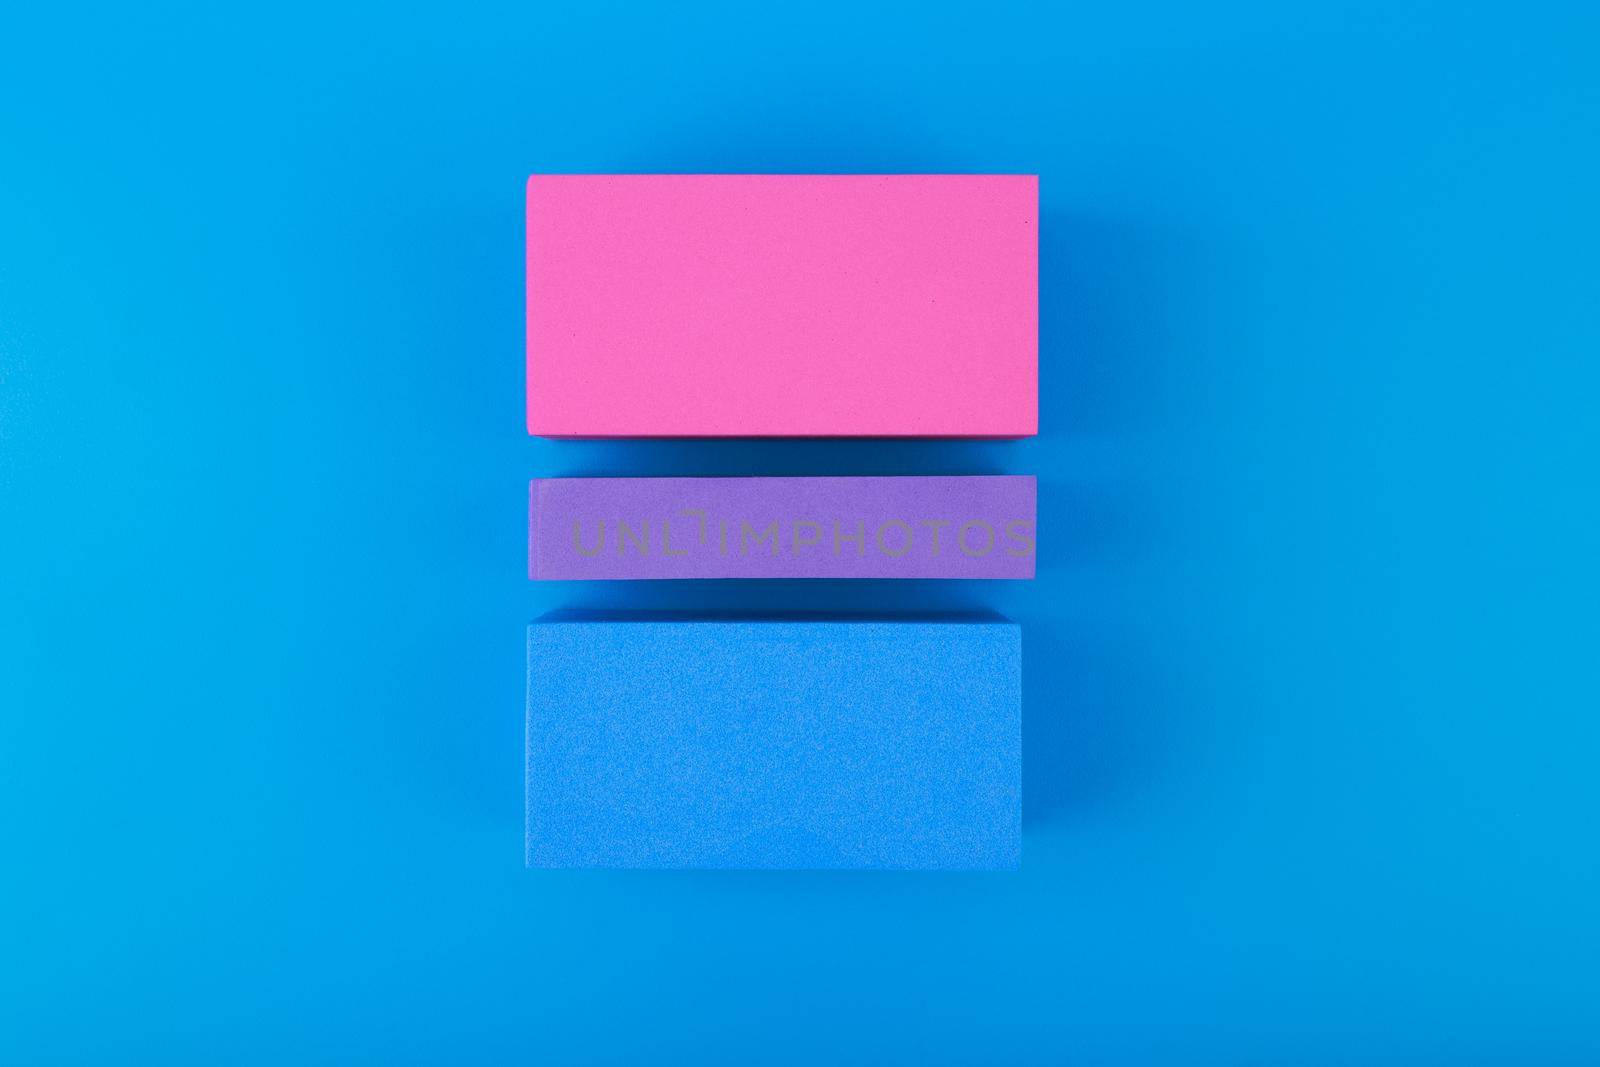 Bisexual pride flag against dark blue background  by Senorina_Irina